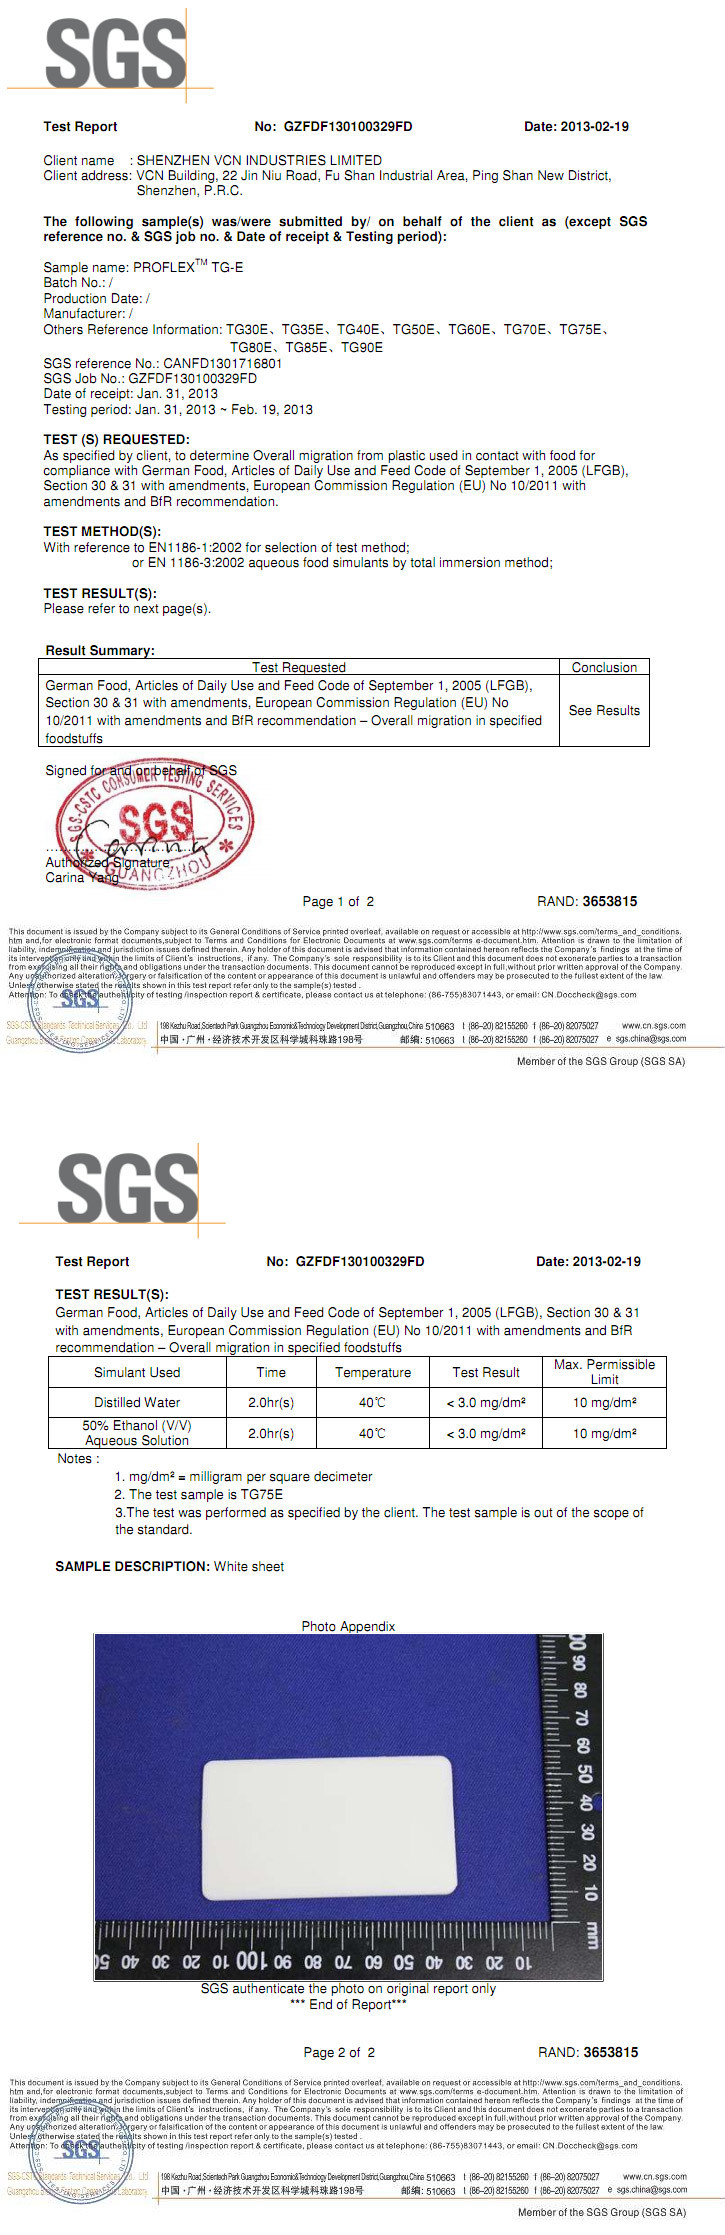 PROFLEX TG-E Series LFGB 50% Alcohol and Distilled Water Test